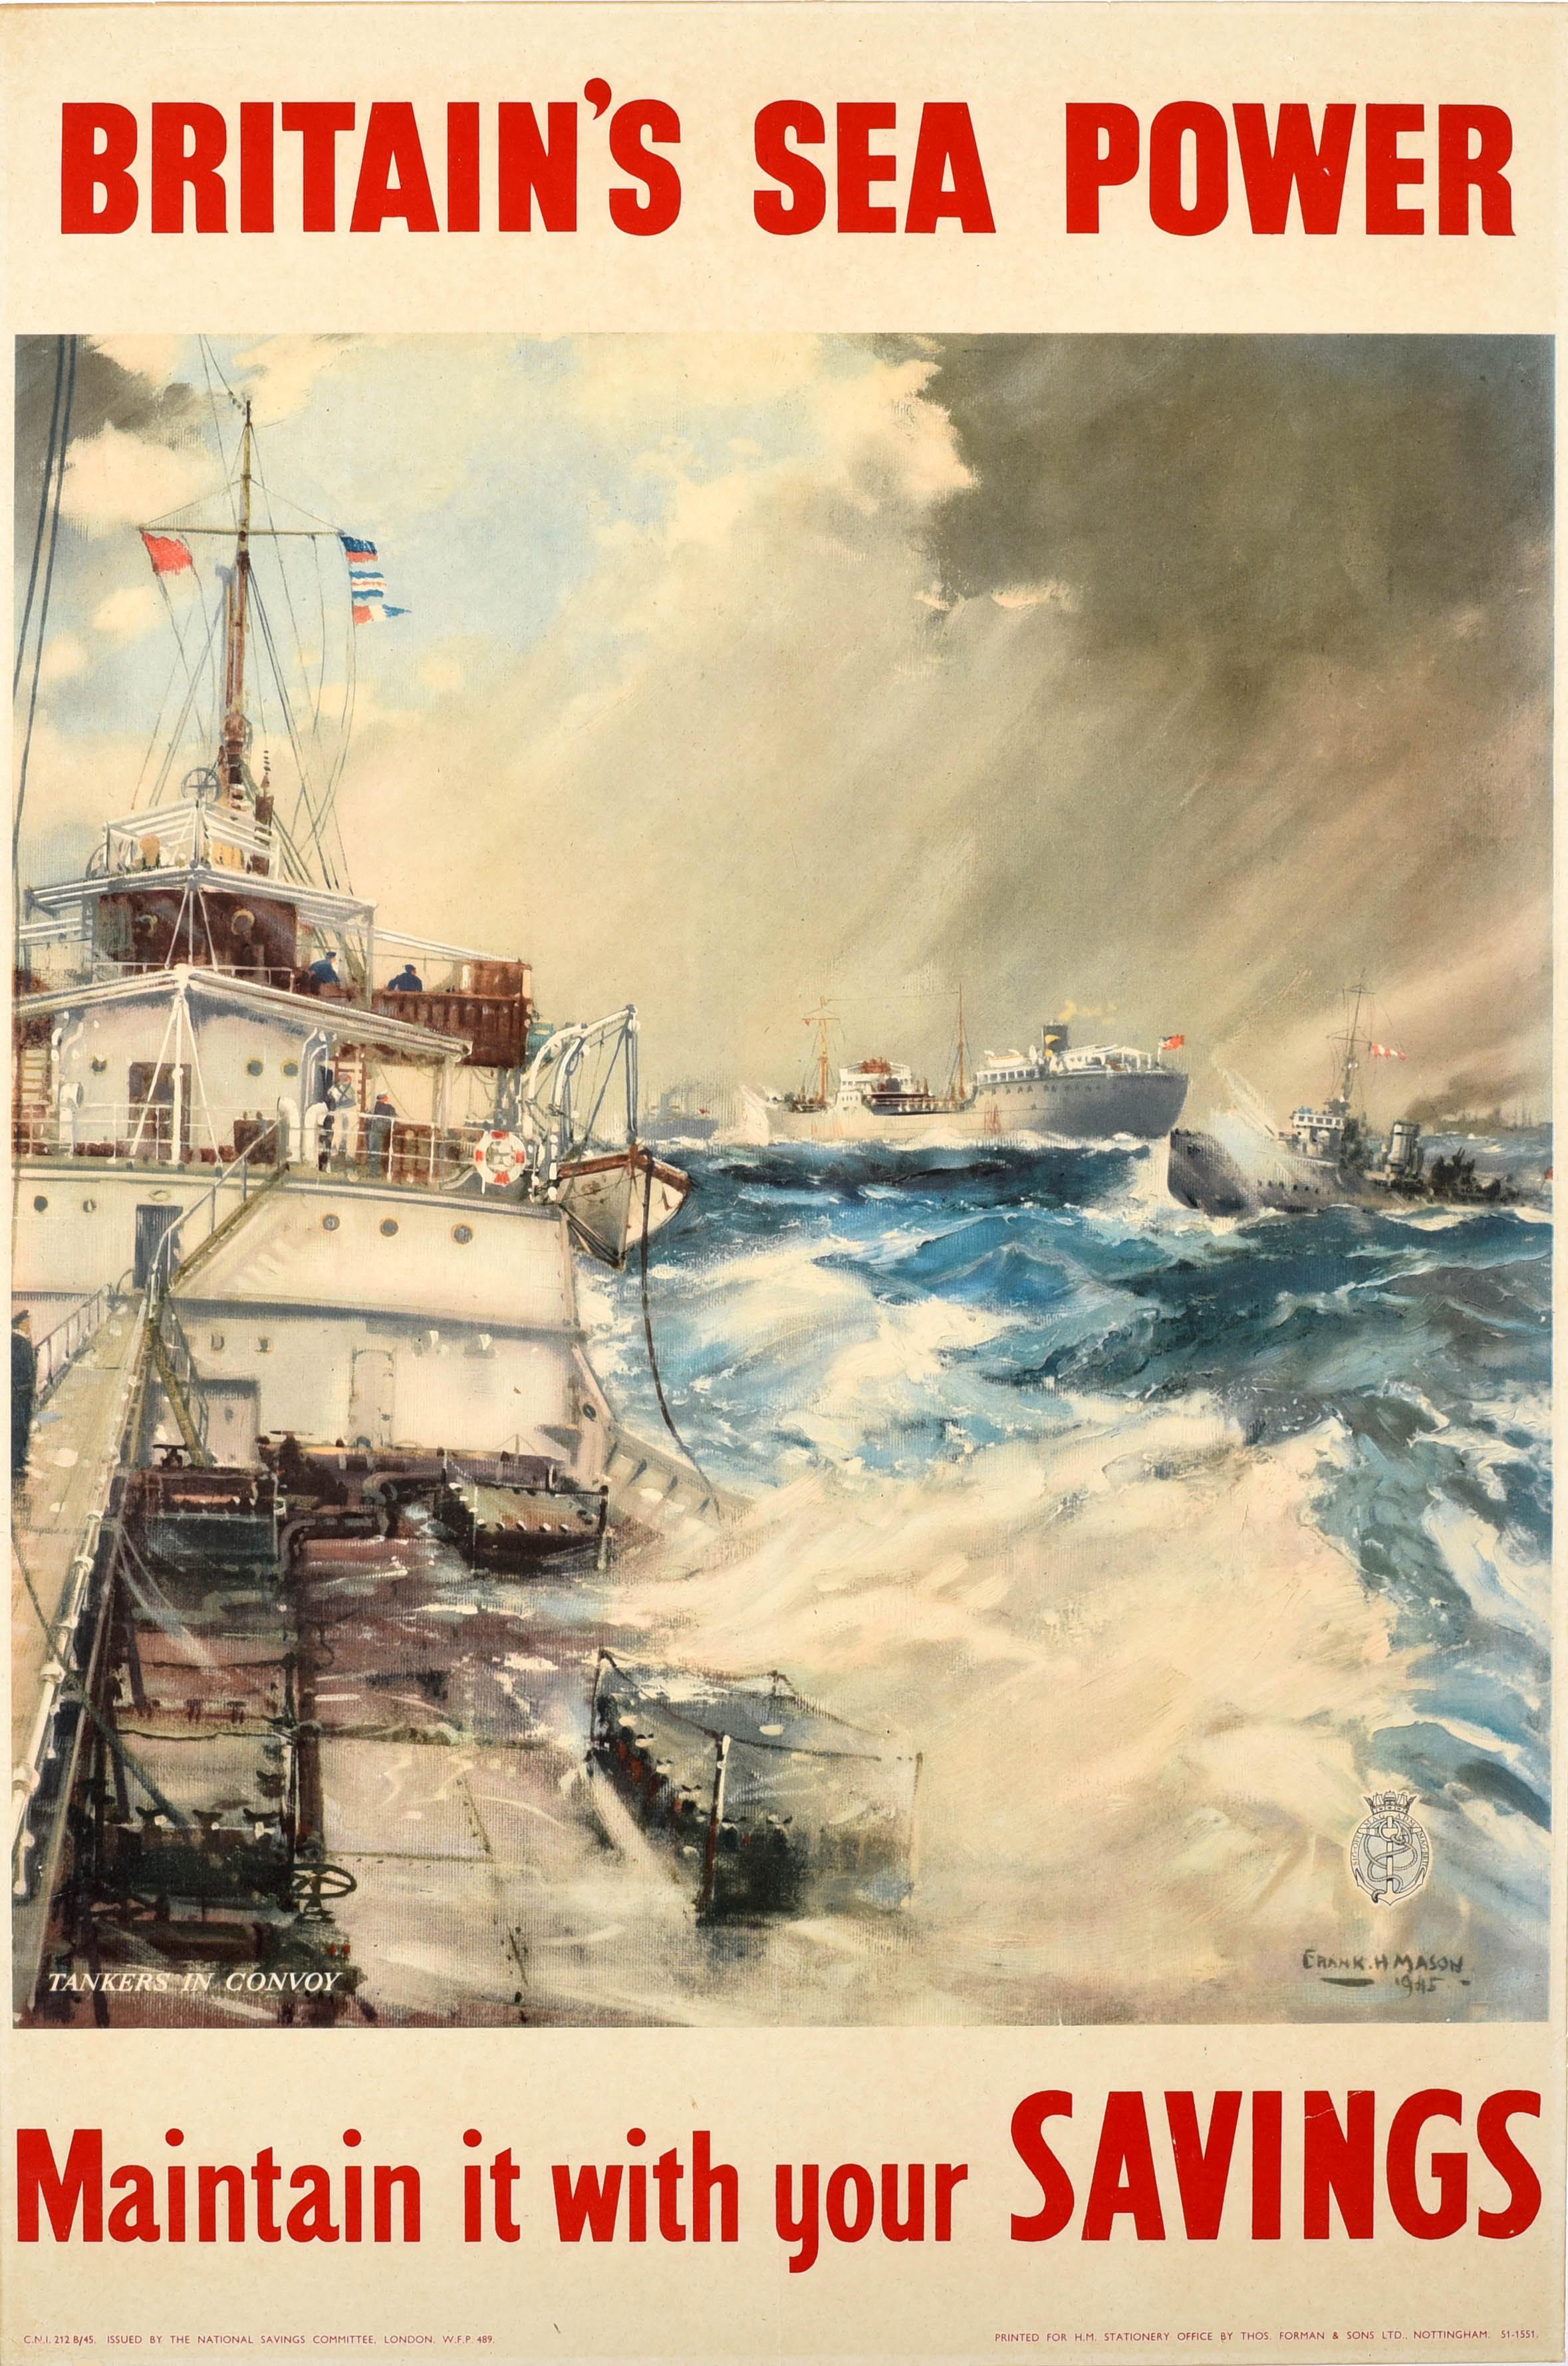 Frank Mason Print - Original Vintage World War Two Poster Britain's Sea Power Maintain Savings WWII